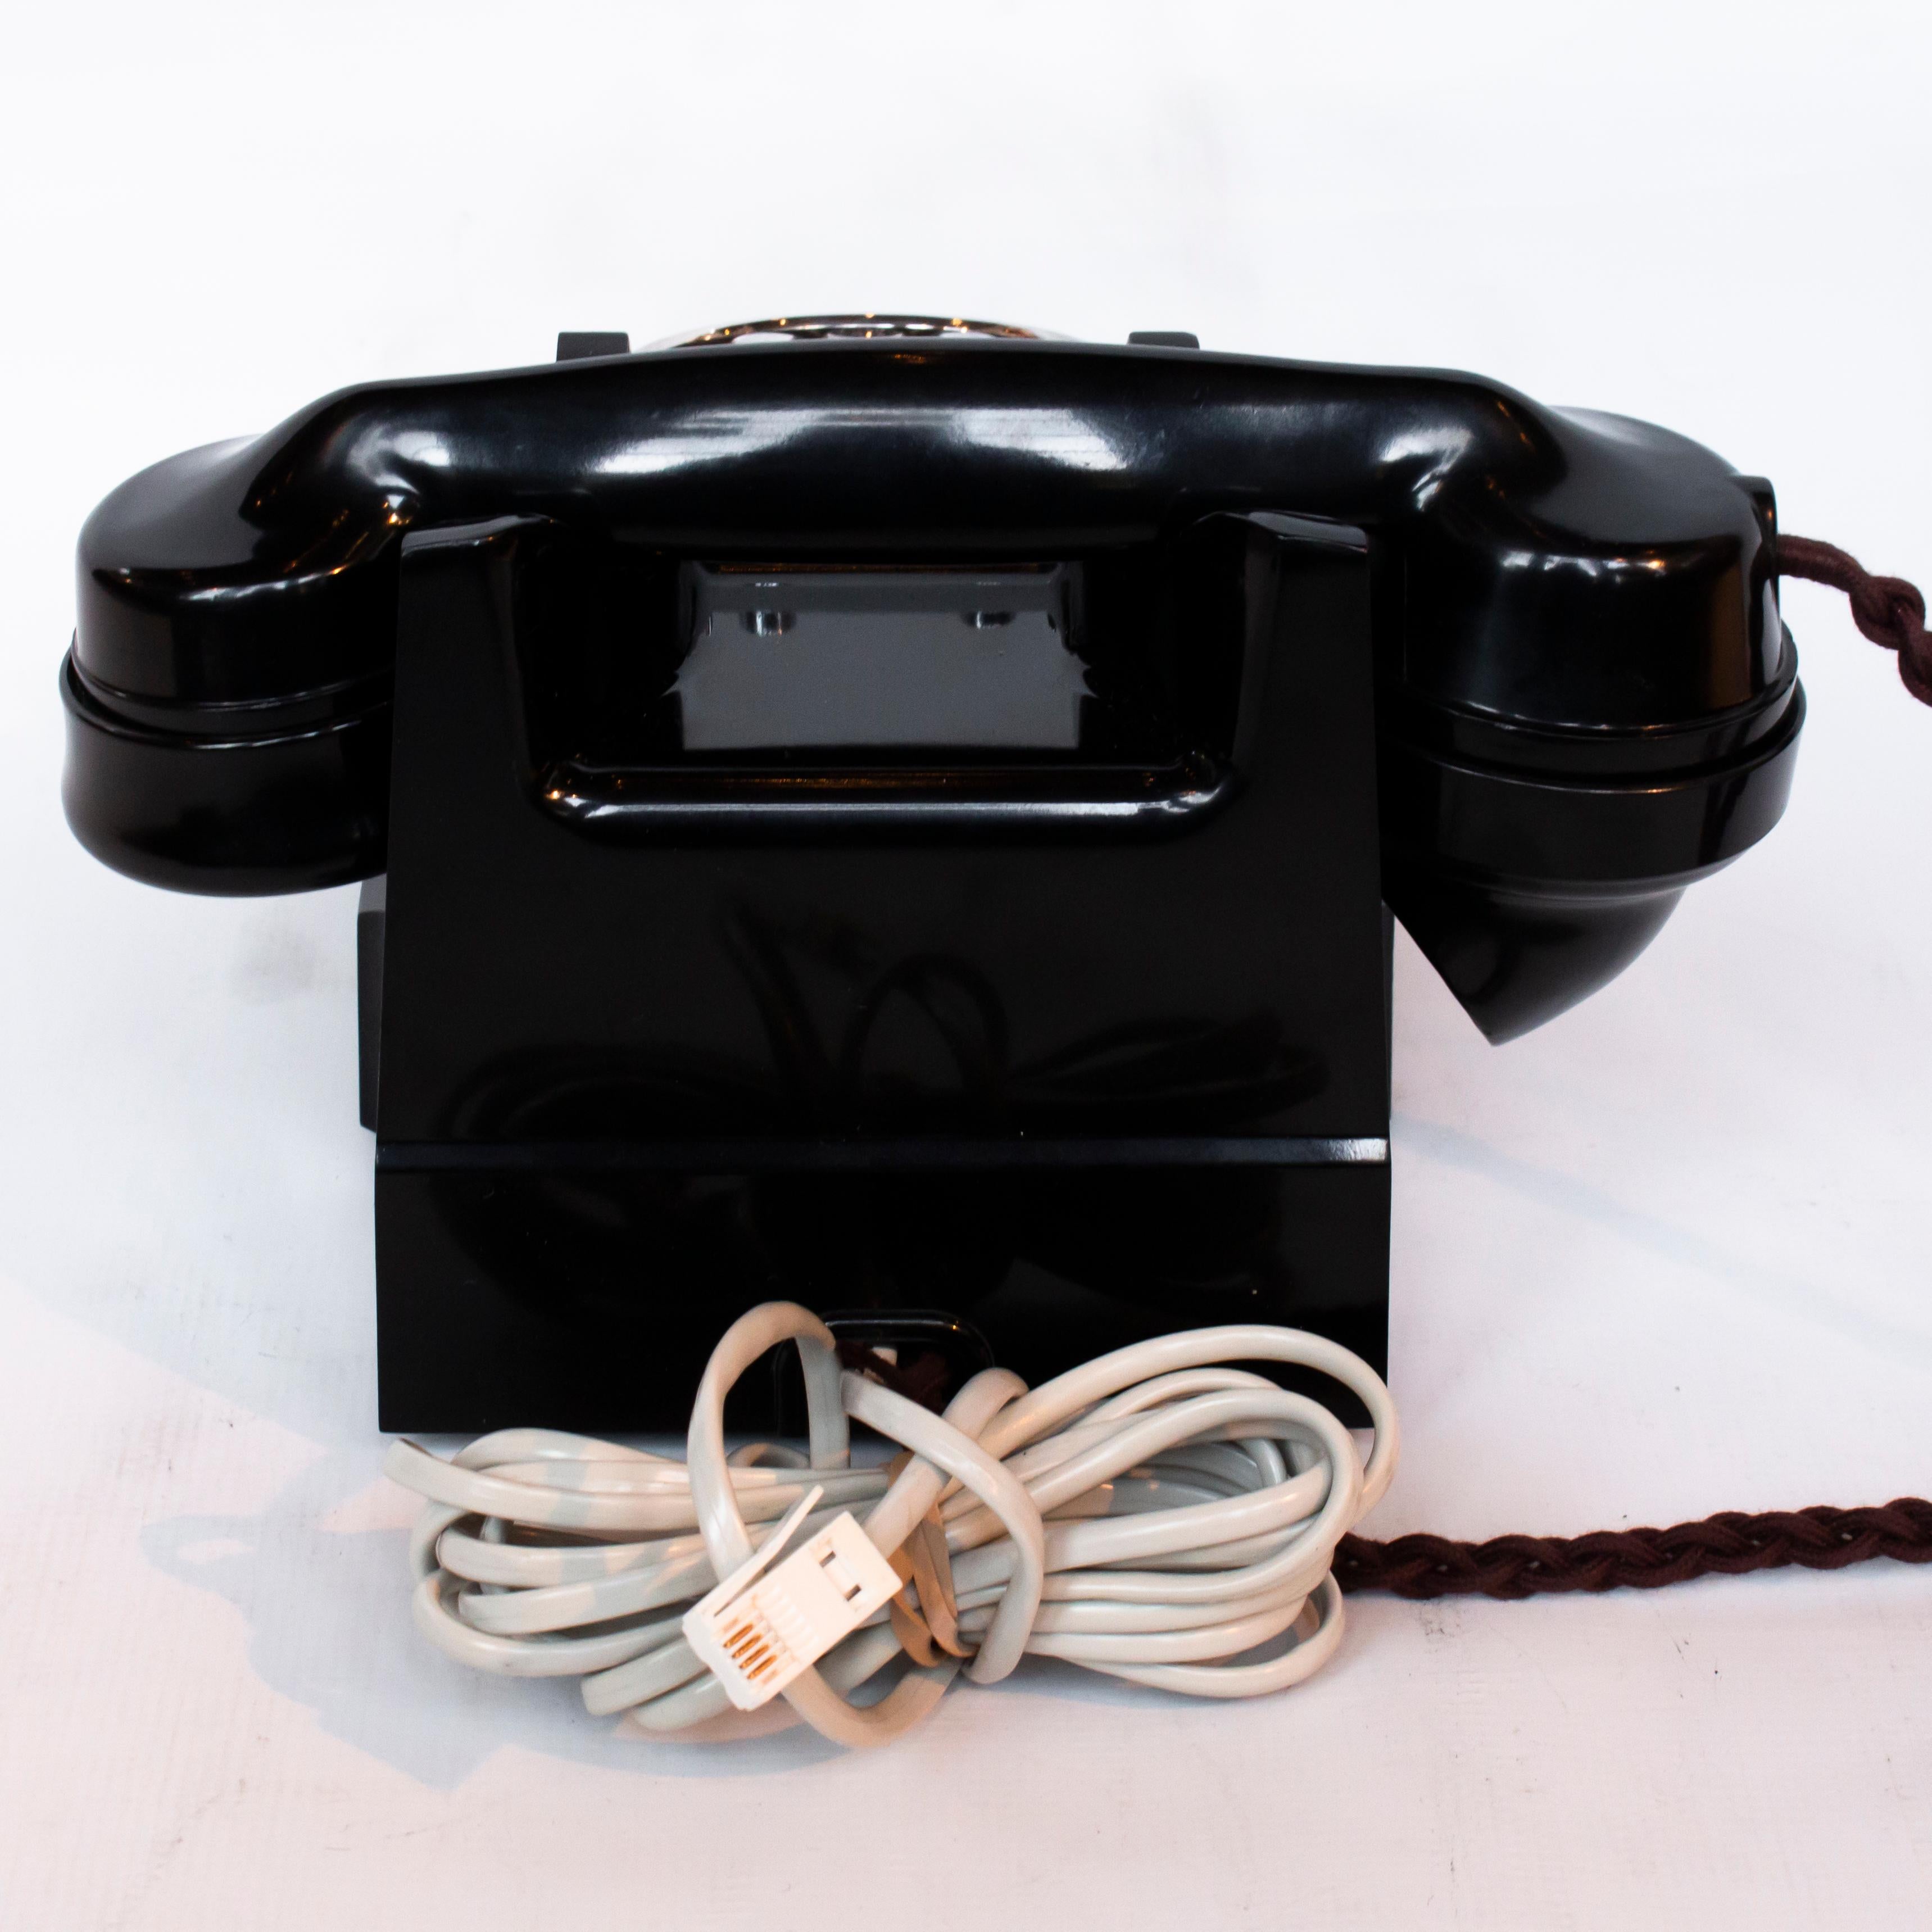 Art Deco Original 1951 GPO Model 332 Telephone with Original Button Features